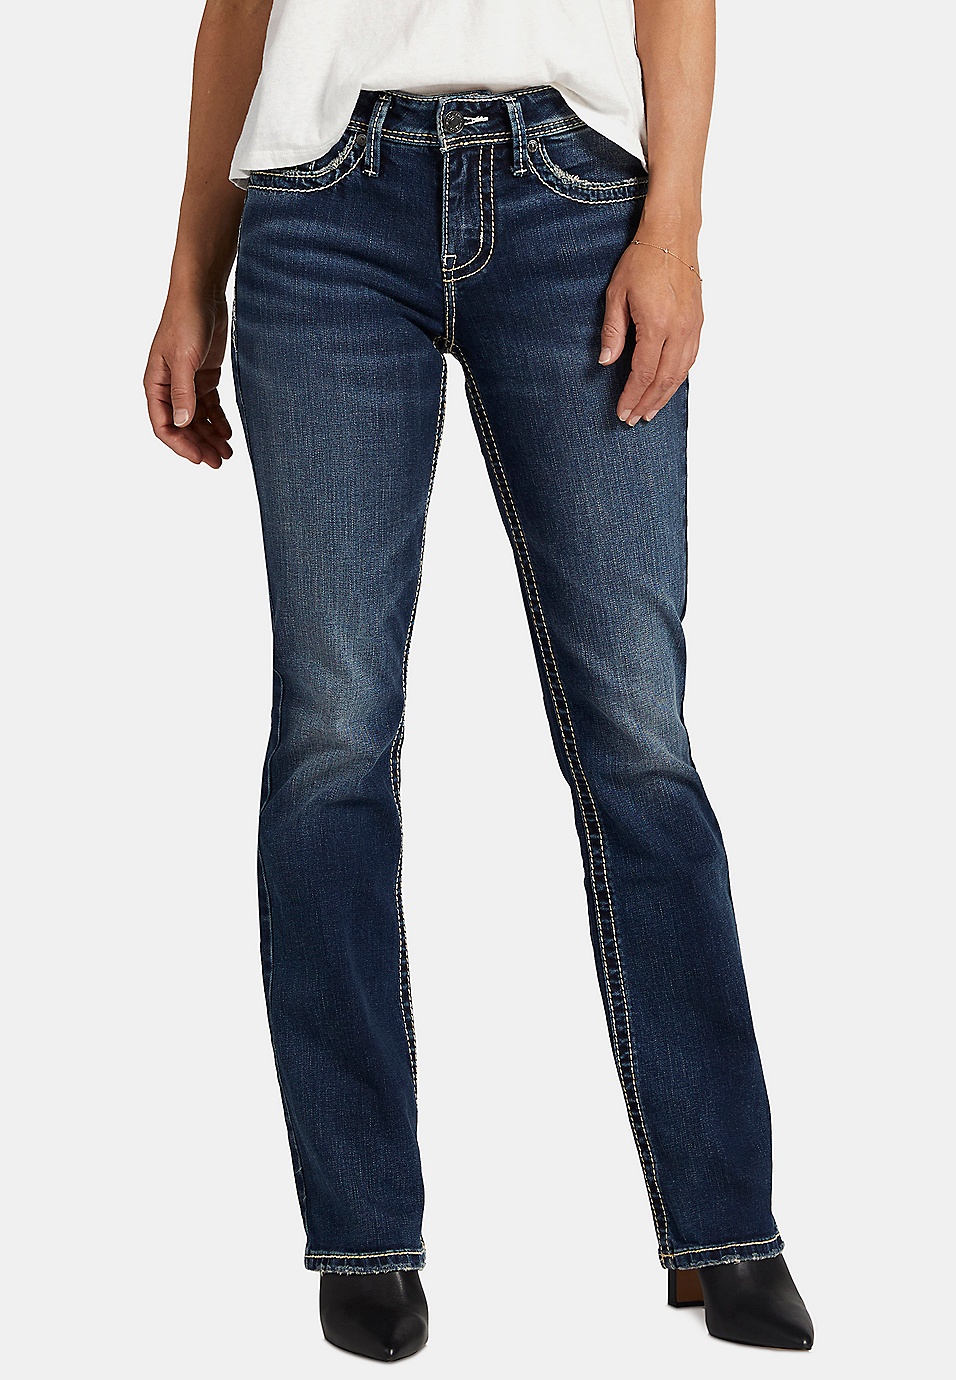 Silver Jeans Co. Women's Plus Size Suki Mid Rise Slim Bootcut Jeans, Dark  Indigo Rinse, 14 Plus Short : : Clothing, Shoes & Accessories